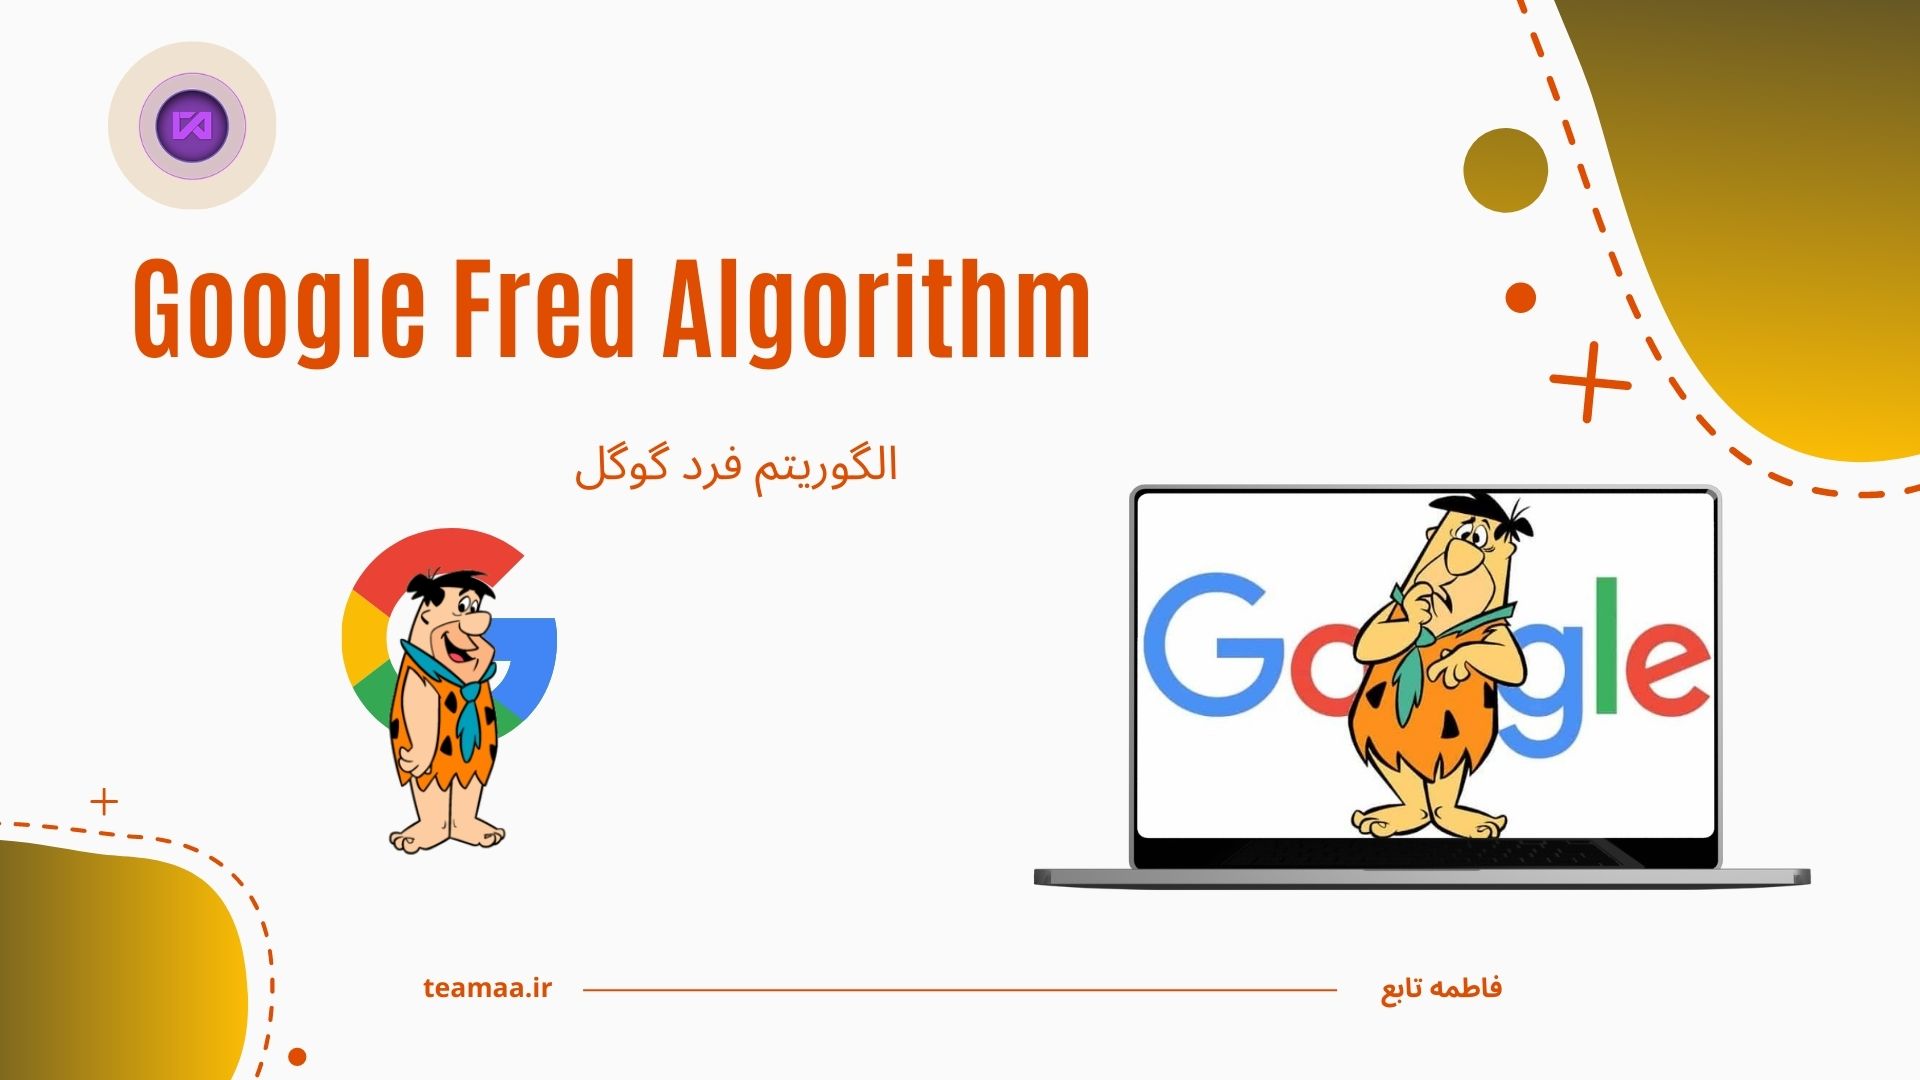 https://teamaa.ir/Assets/Images/Blog/TEAMAA-(MmaAh8kd)_google Fred algorithm.jpg